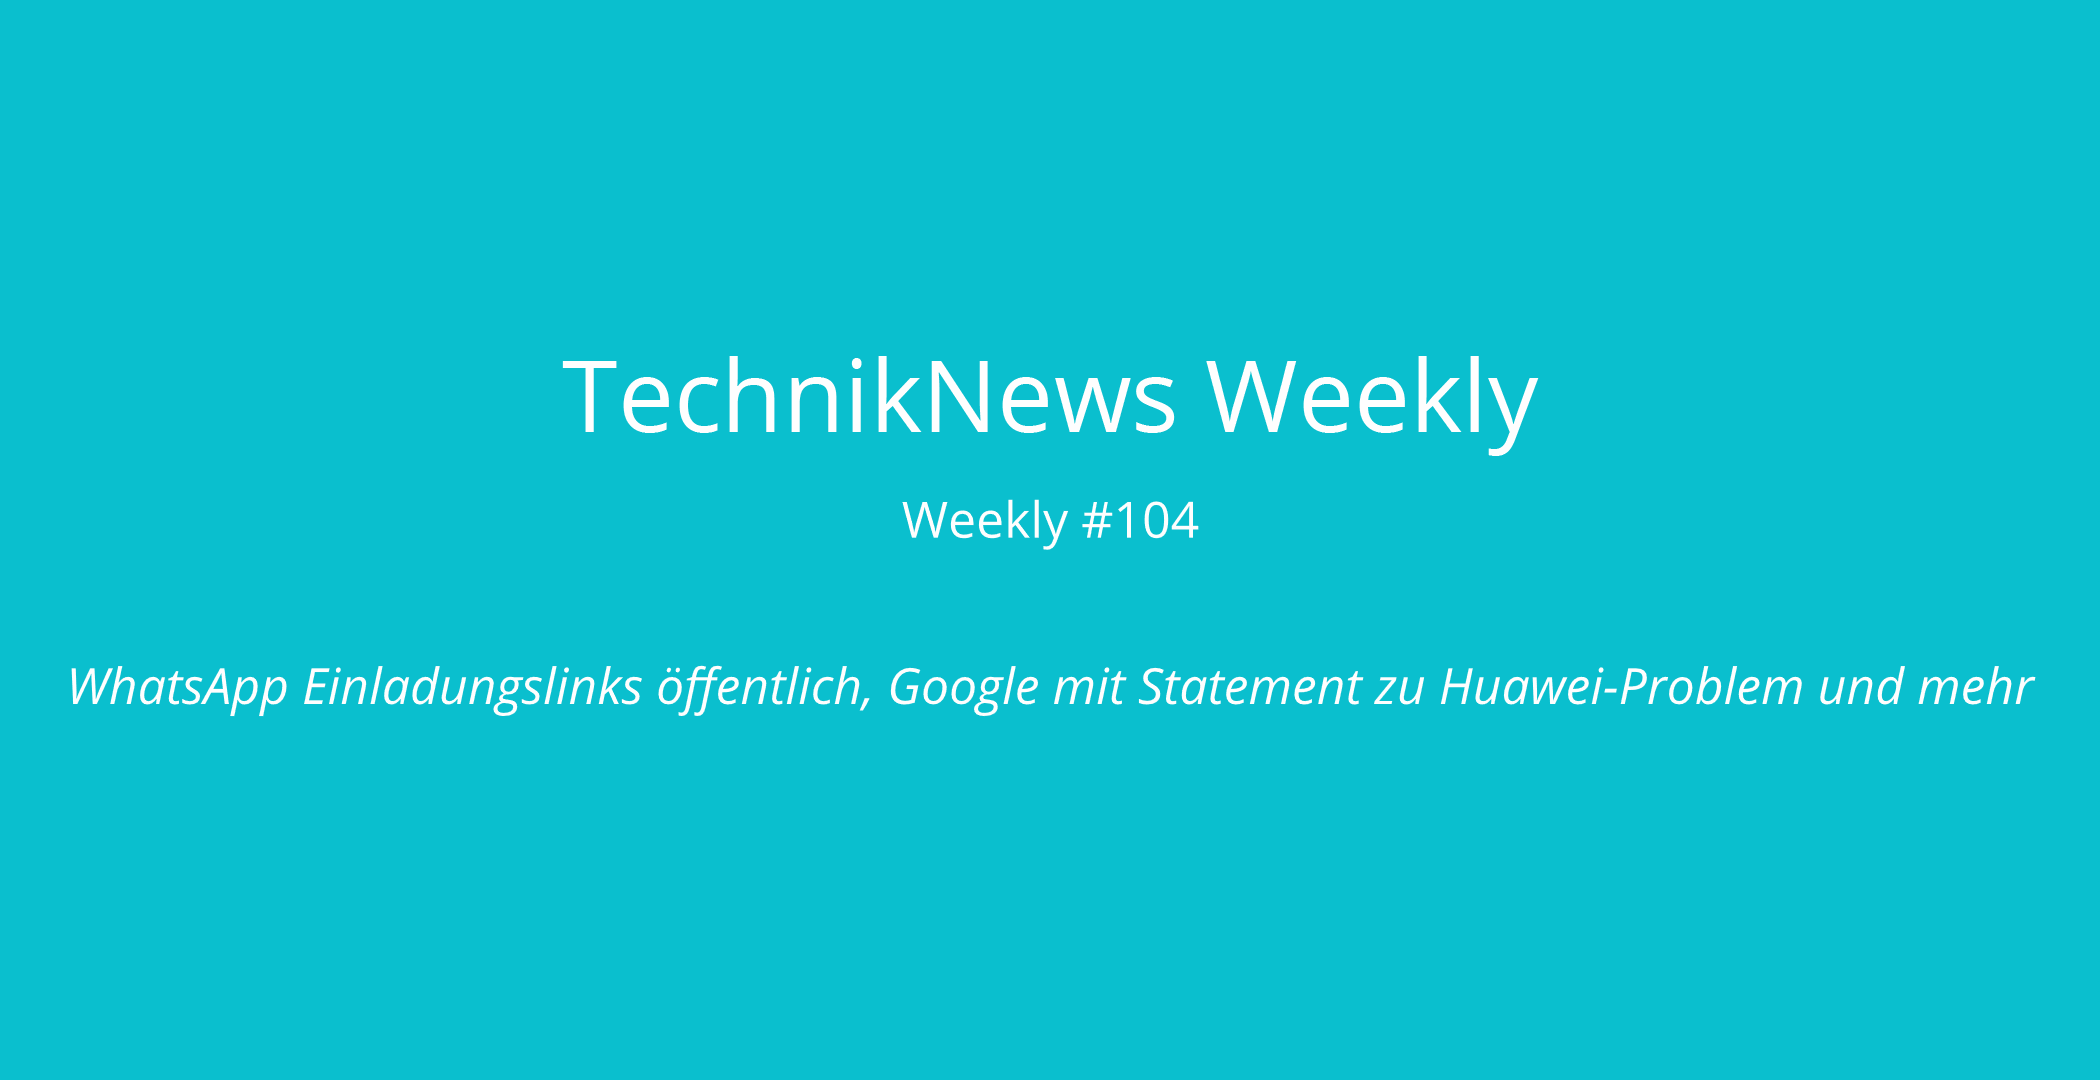 TechnikNews Weekly 104